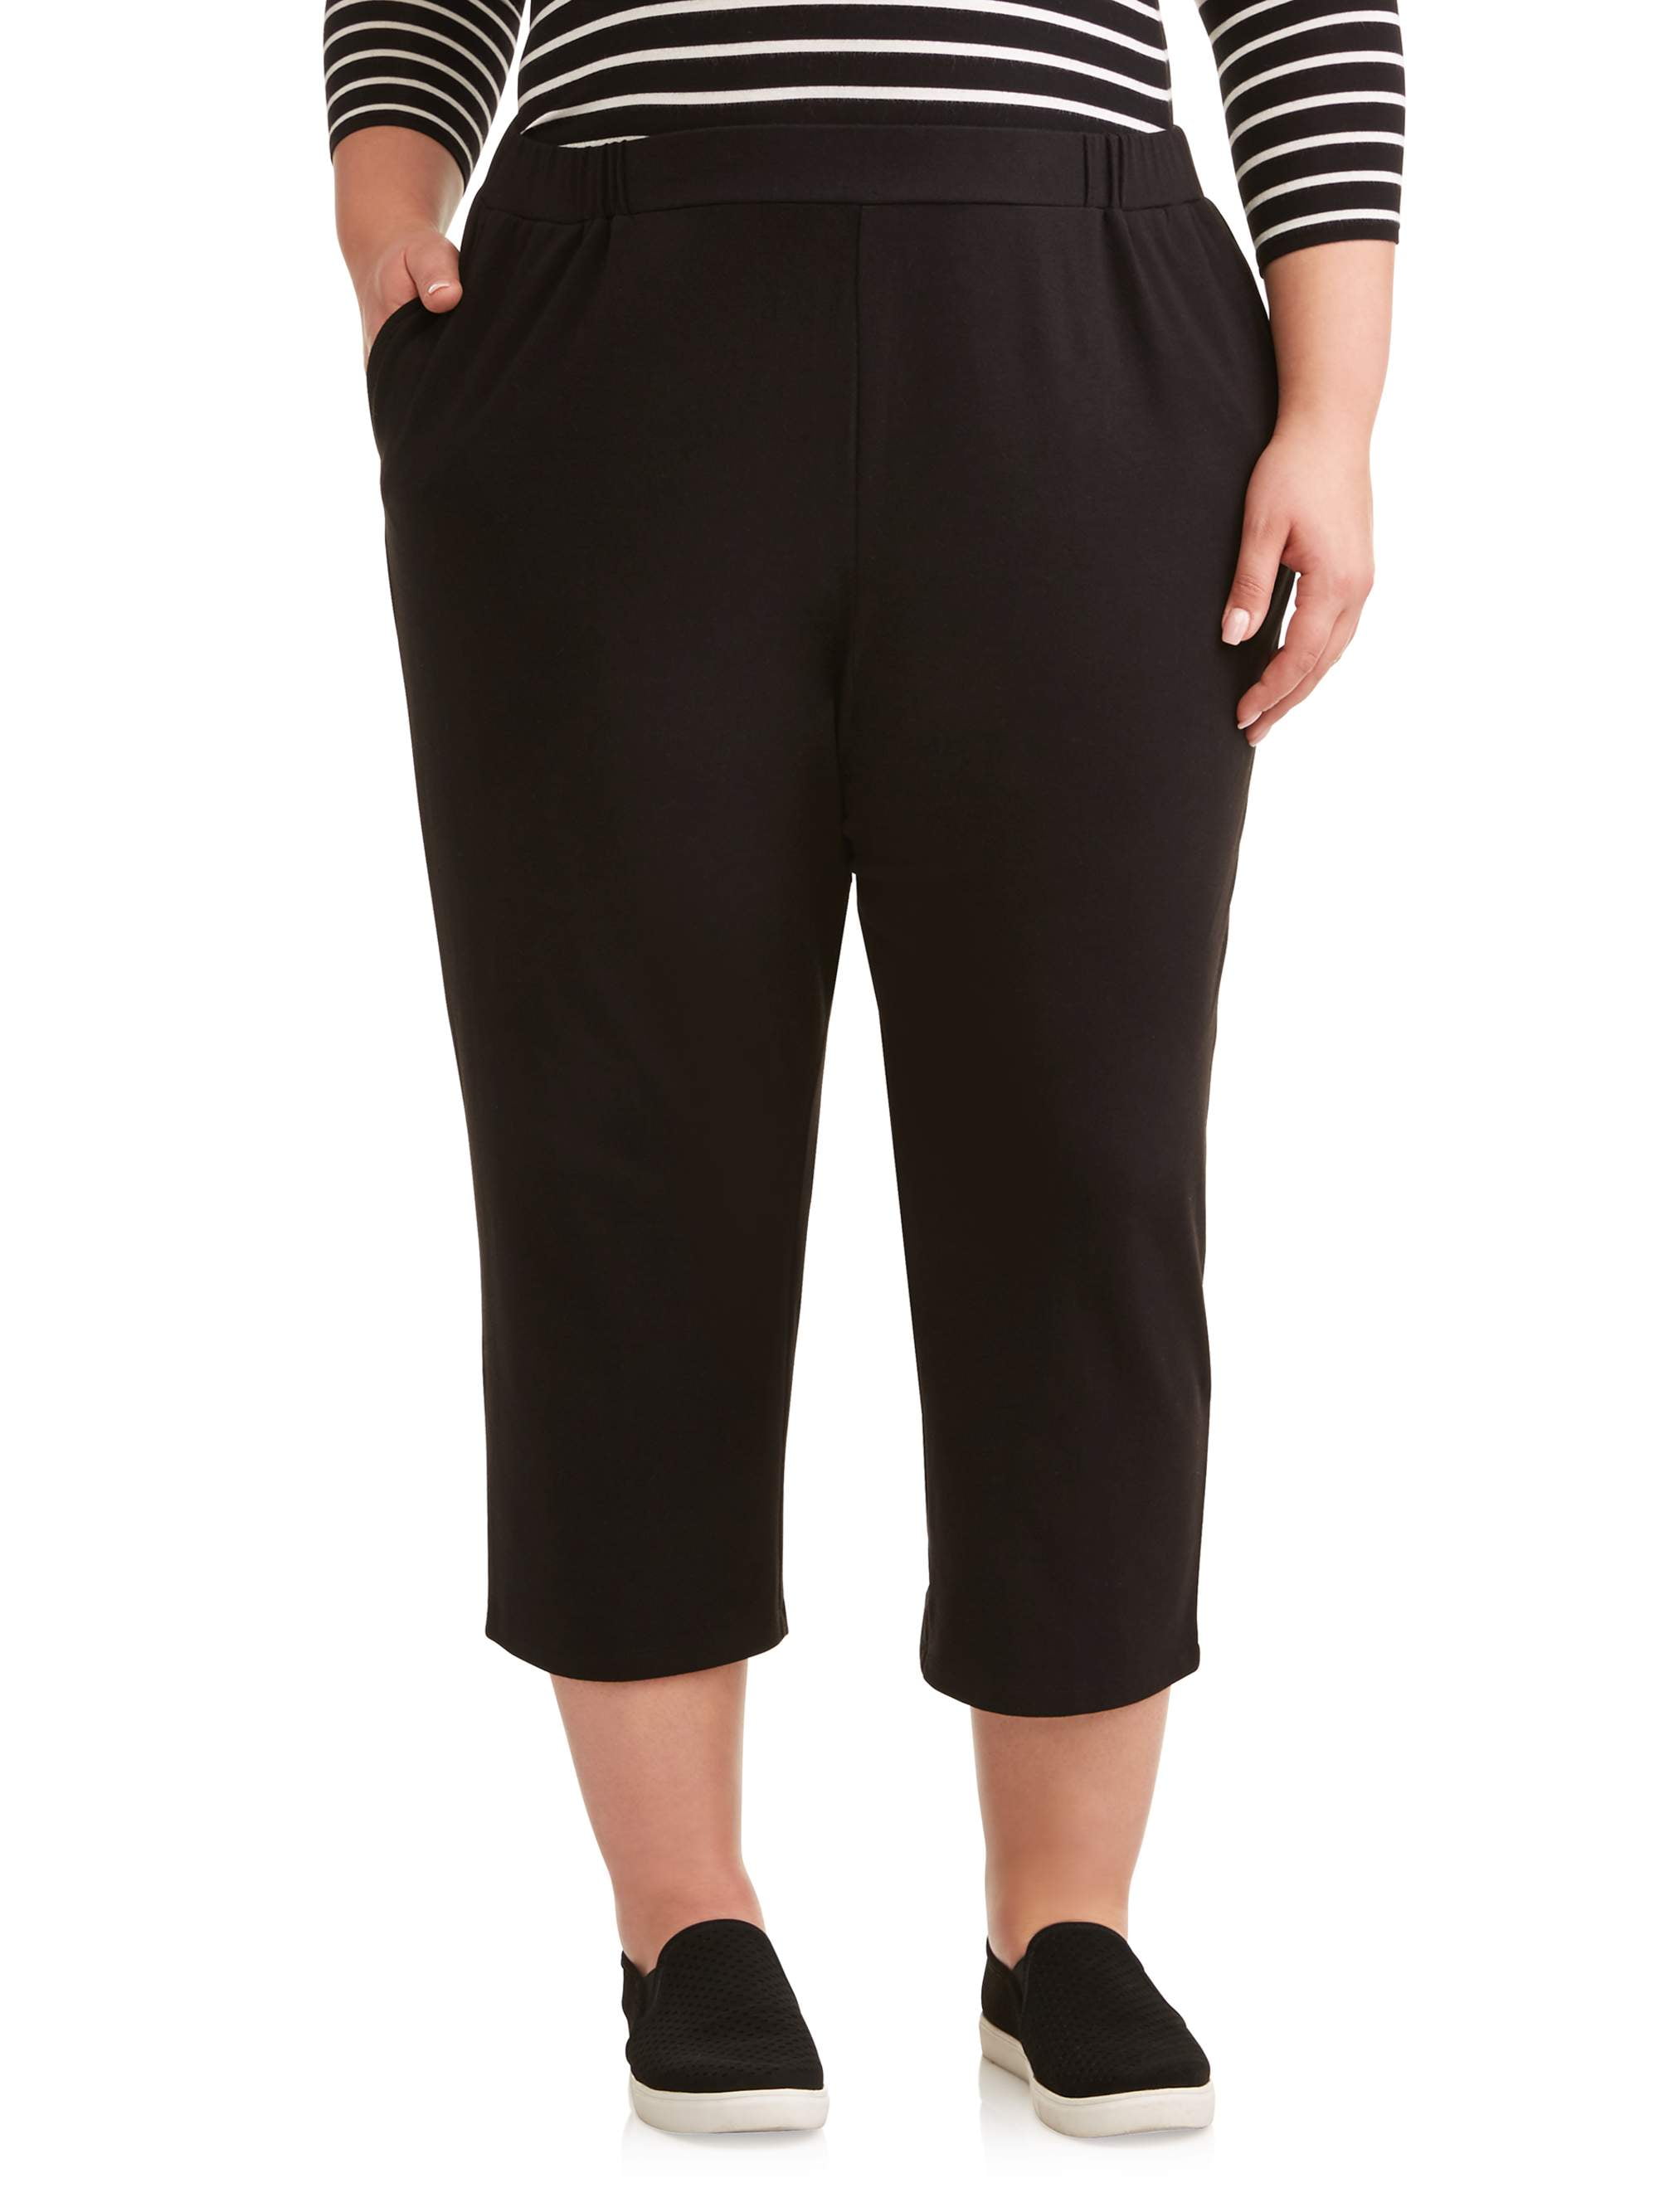 Terra & Sky Women's Plus Size Knit Capri - Walmart.com